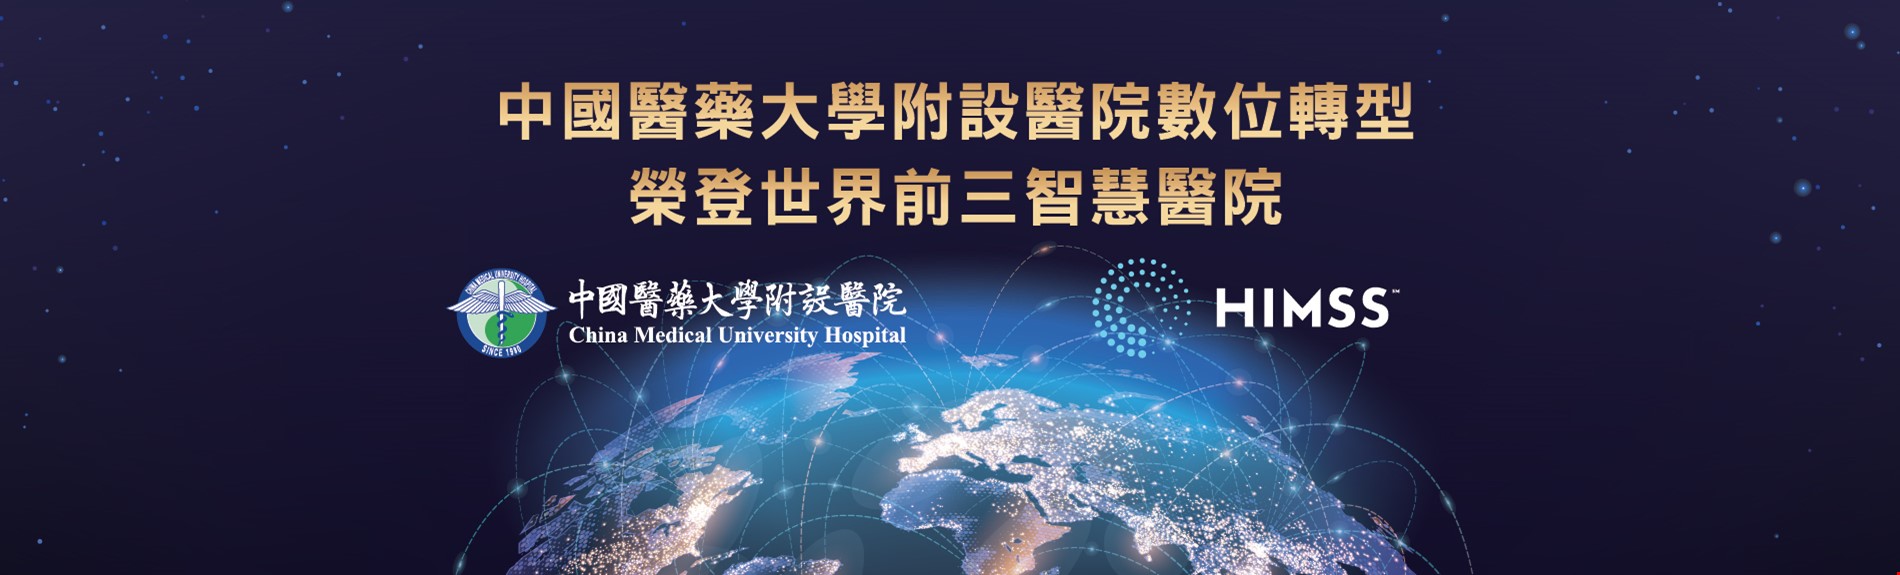 HIMSS 中國醫藥大學附設醫院轉型榮登世界前三智慧醫院